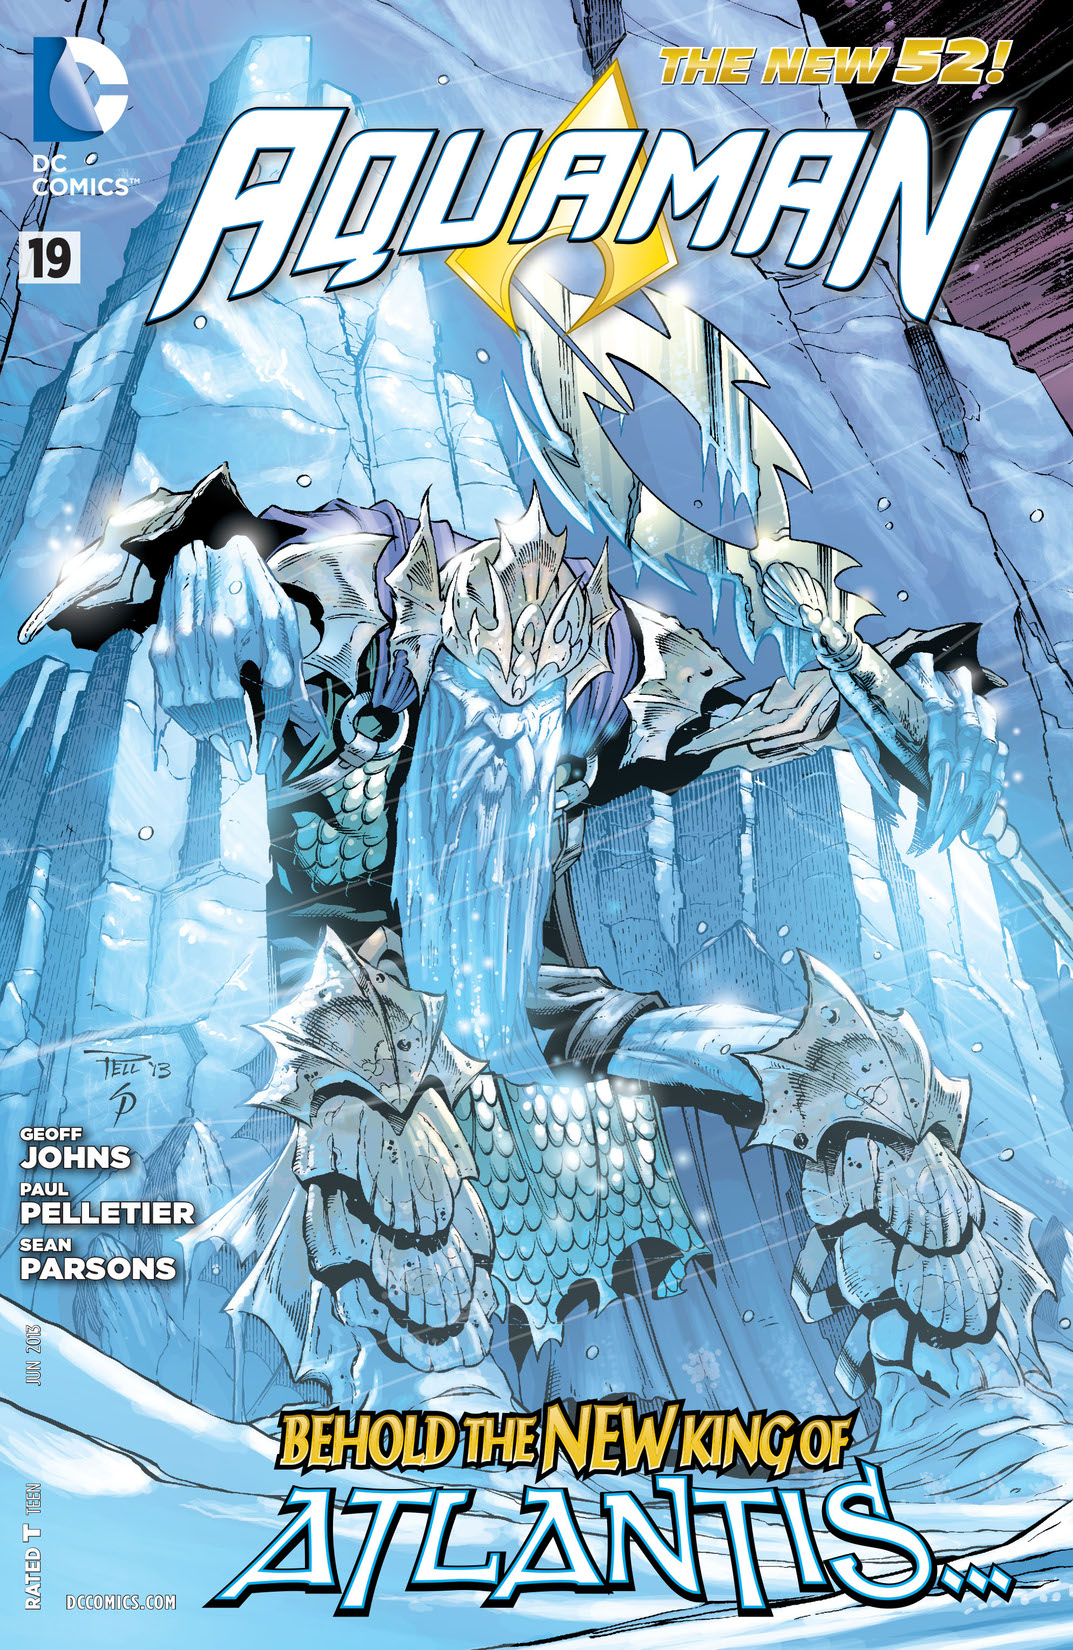 Aquaman (2011-) #19 preview images